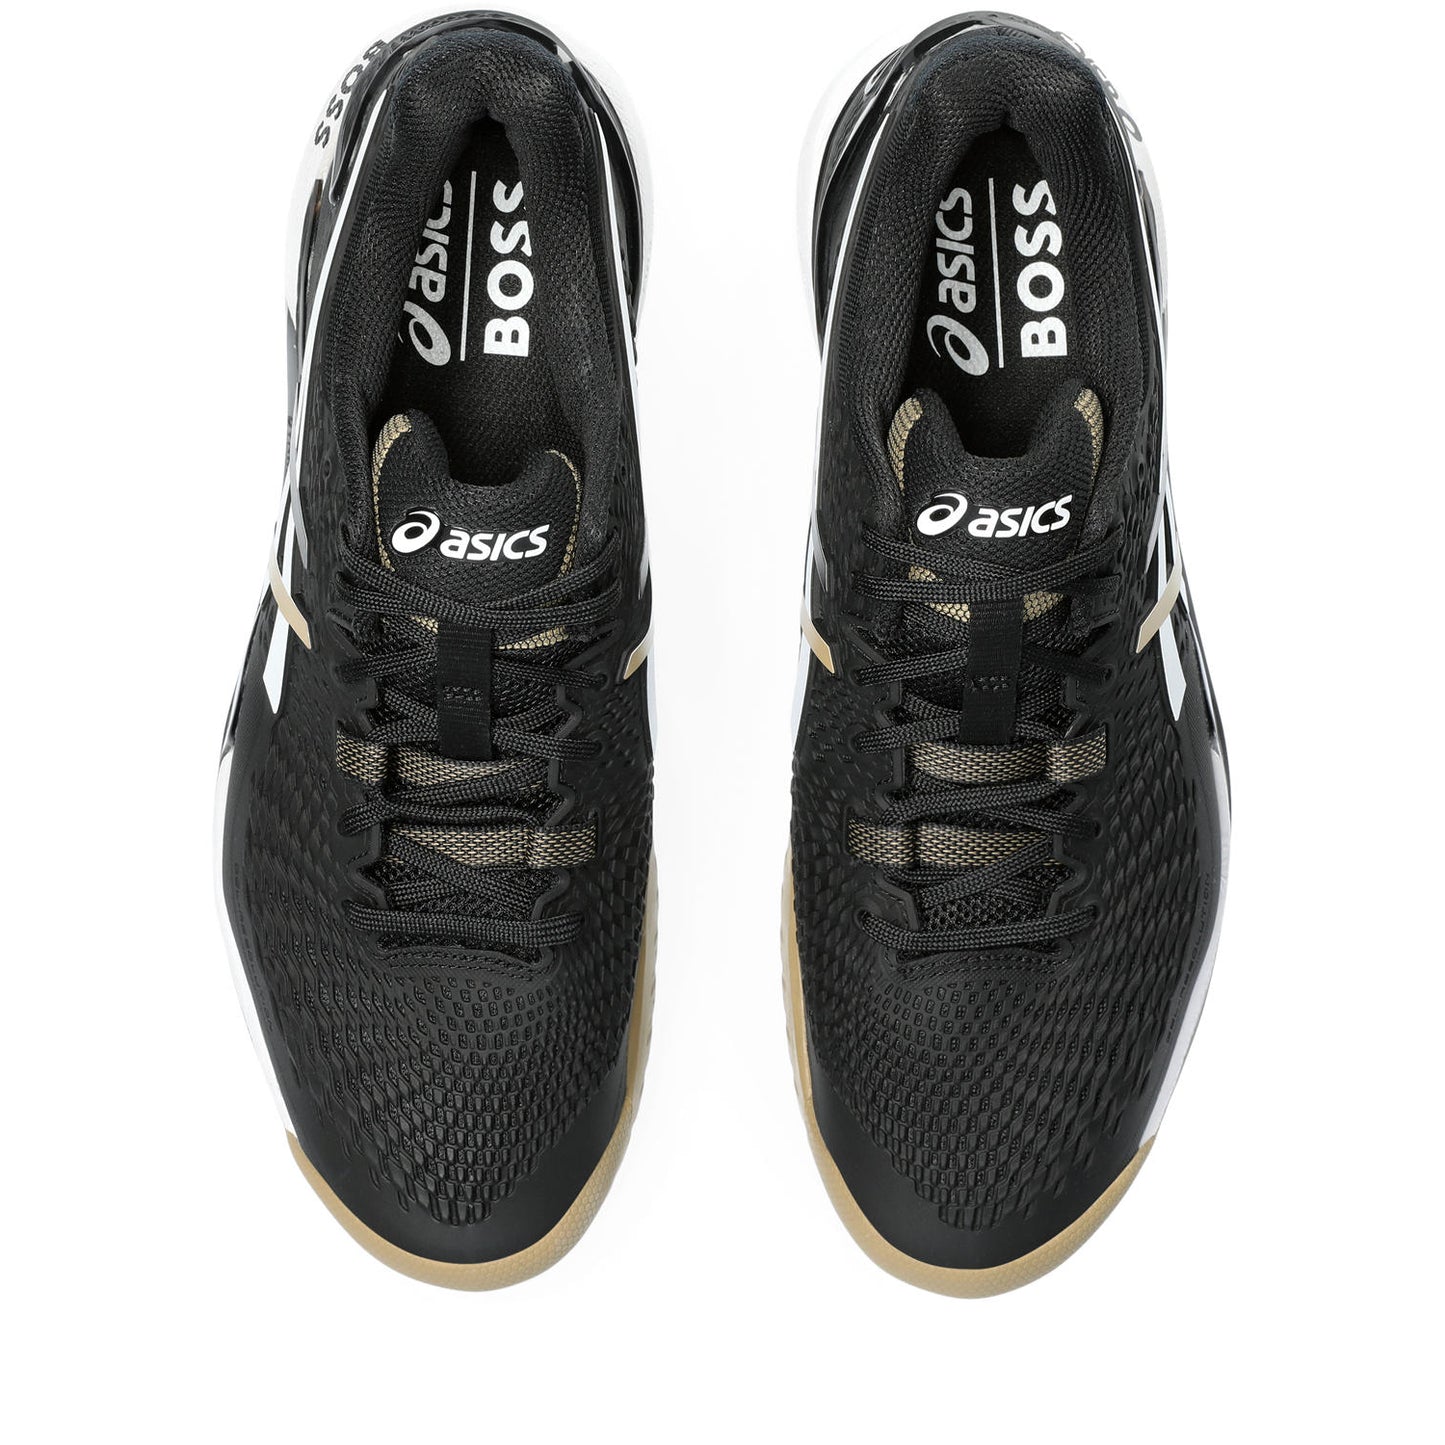 Asics Gel Resolution 9 Men tennis shoes 453.001 Hugo Boss